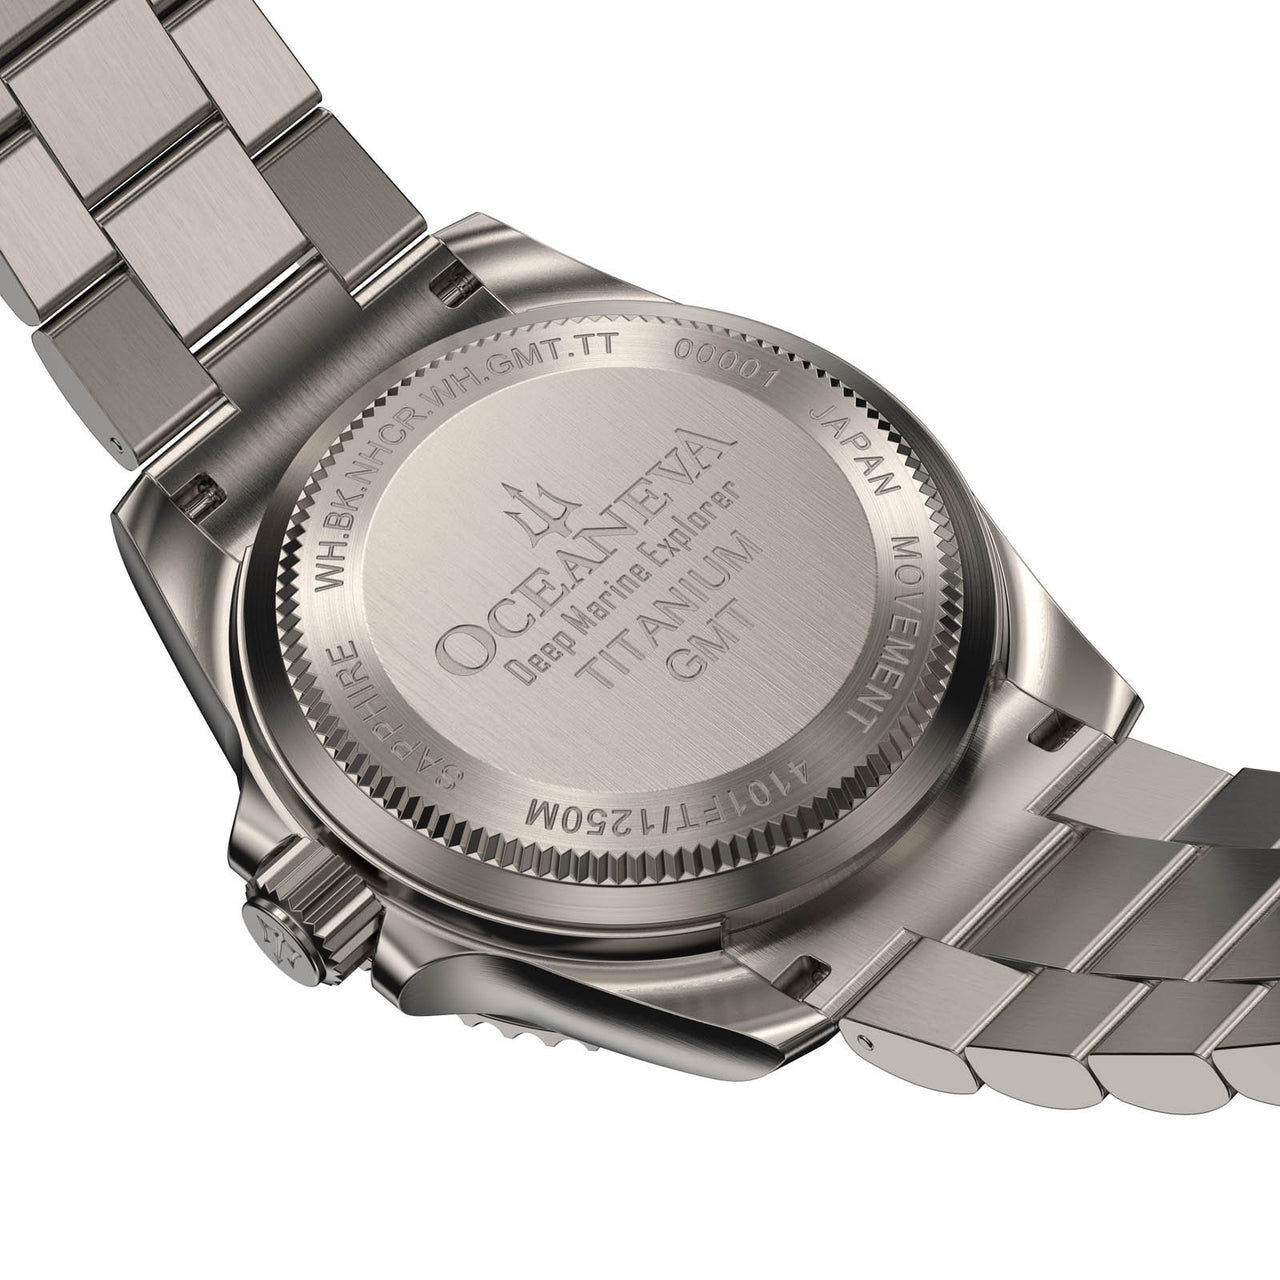 Exclusive look at Oceaneva Titanium Watch serial number on caseback